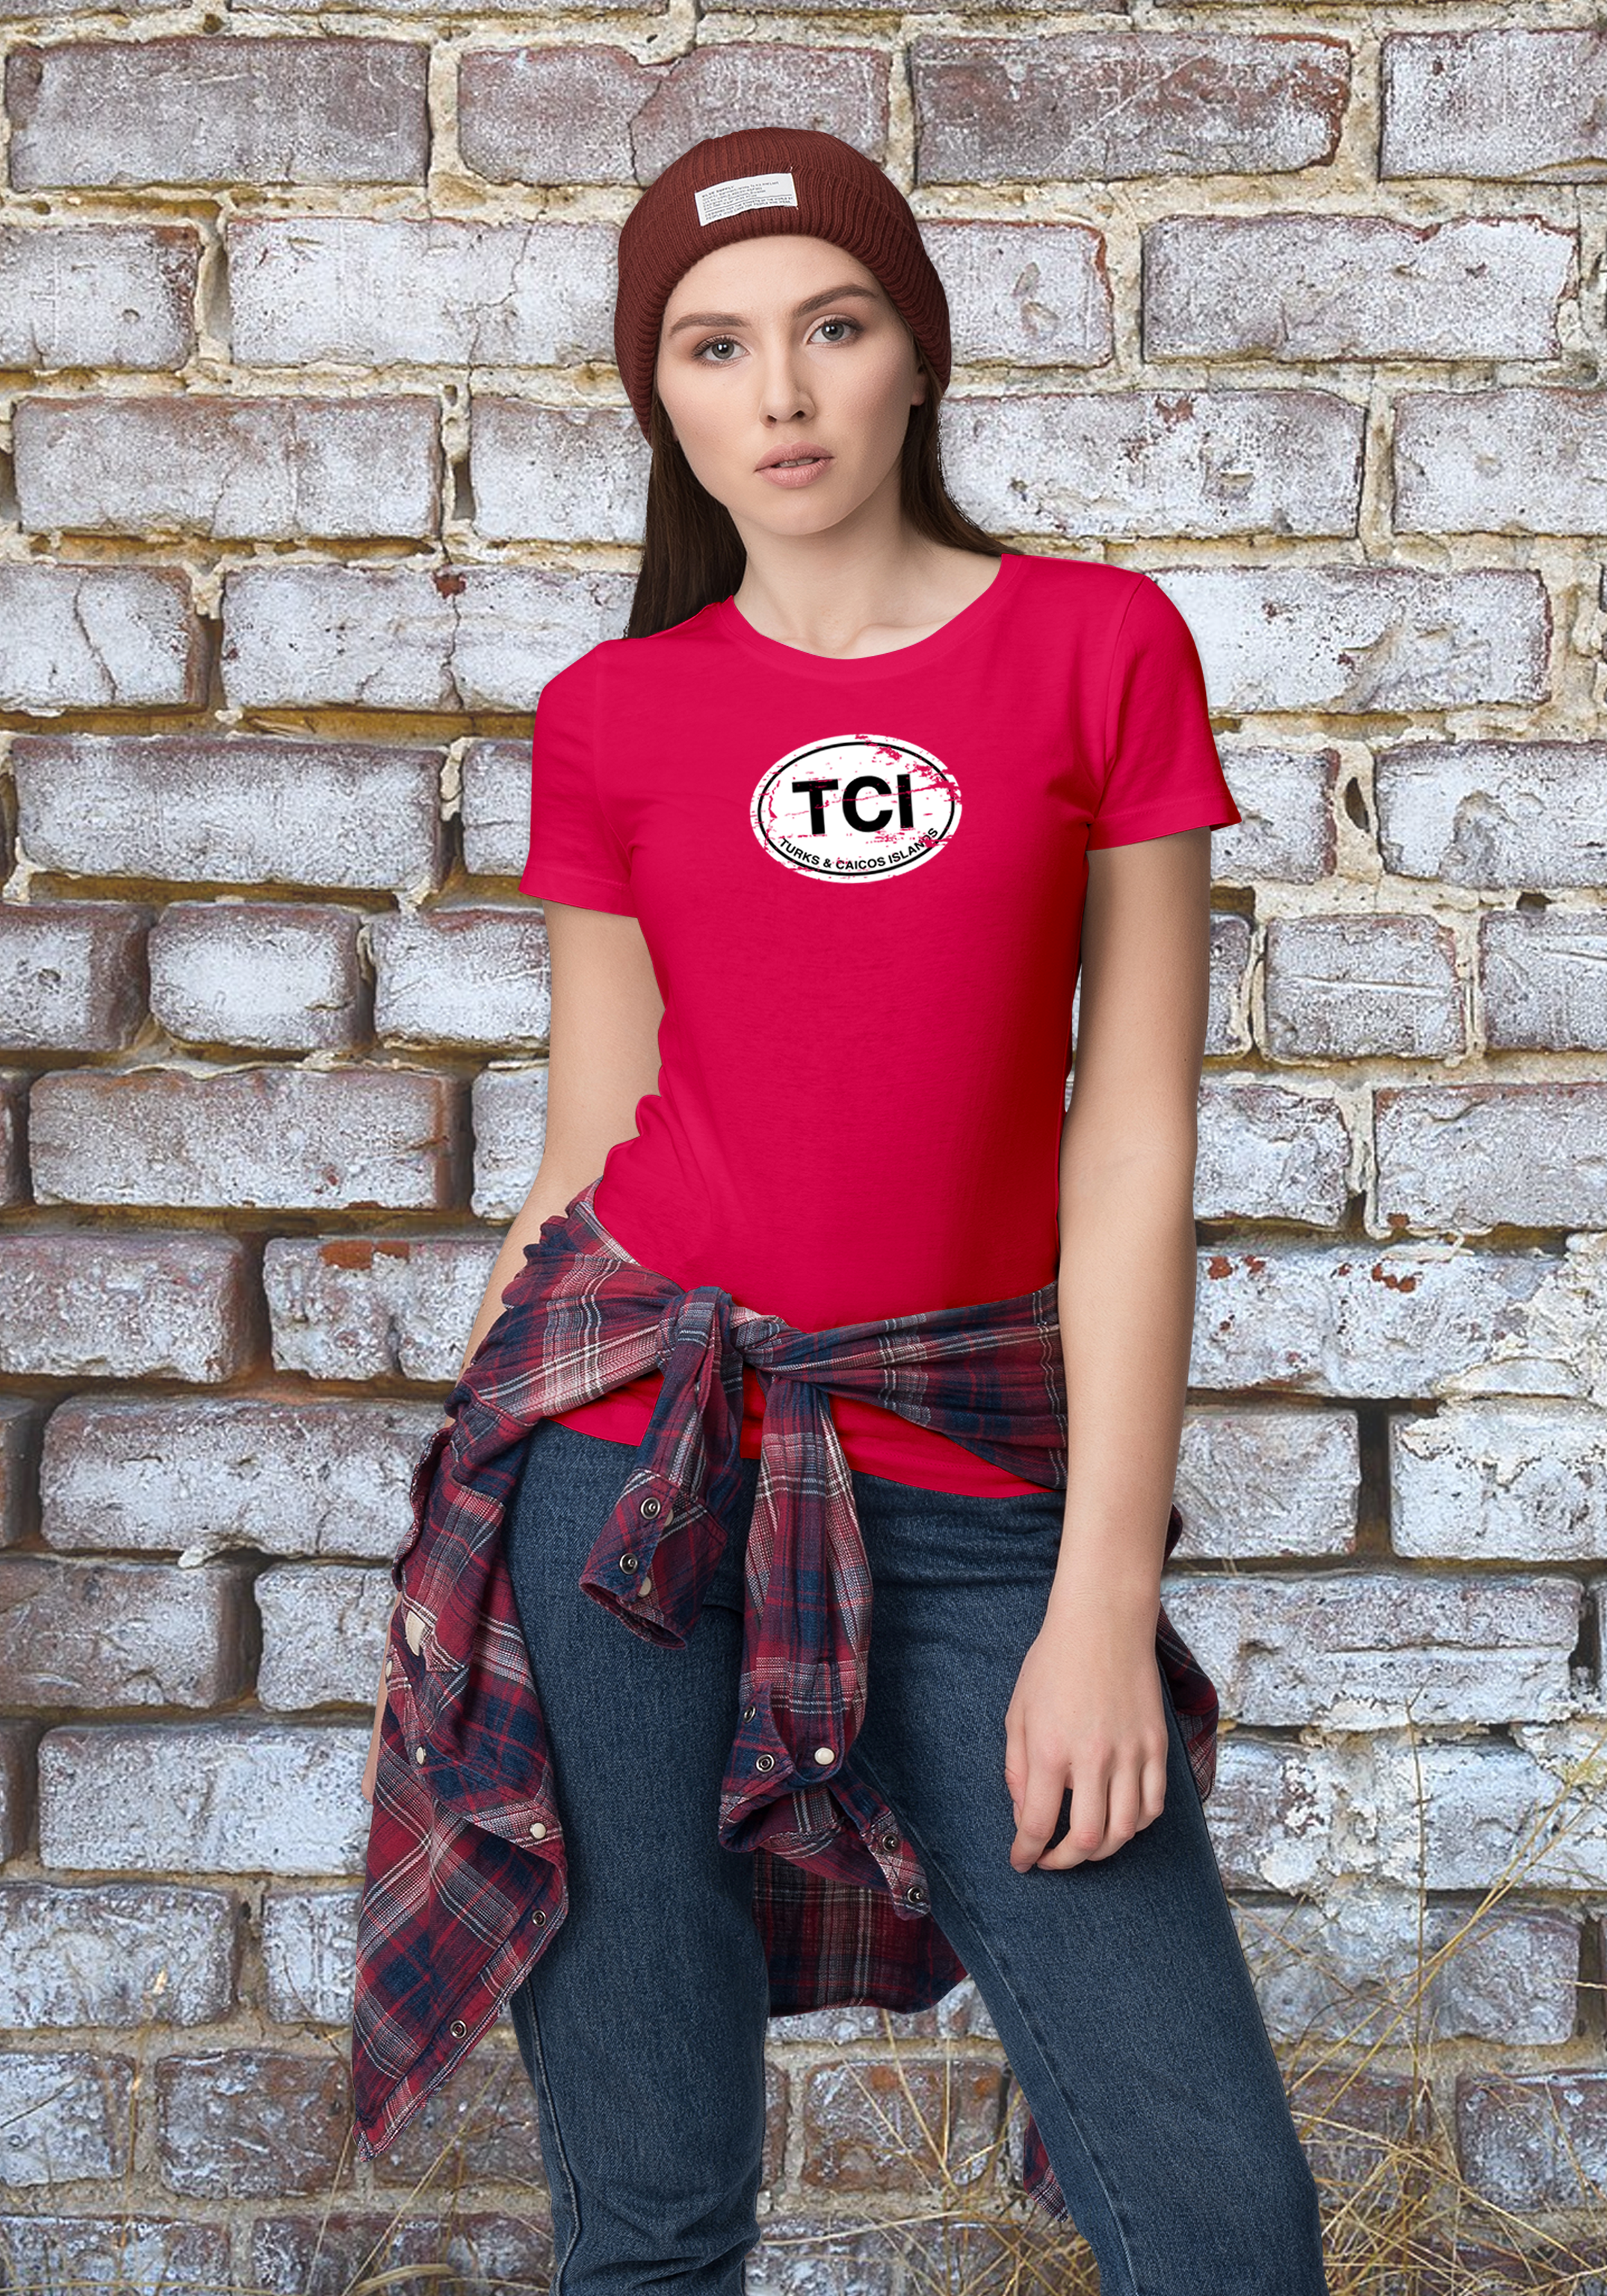 Turks and Caicos Women's Classic T-Shirt Souvenirs - My Destination Location